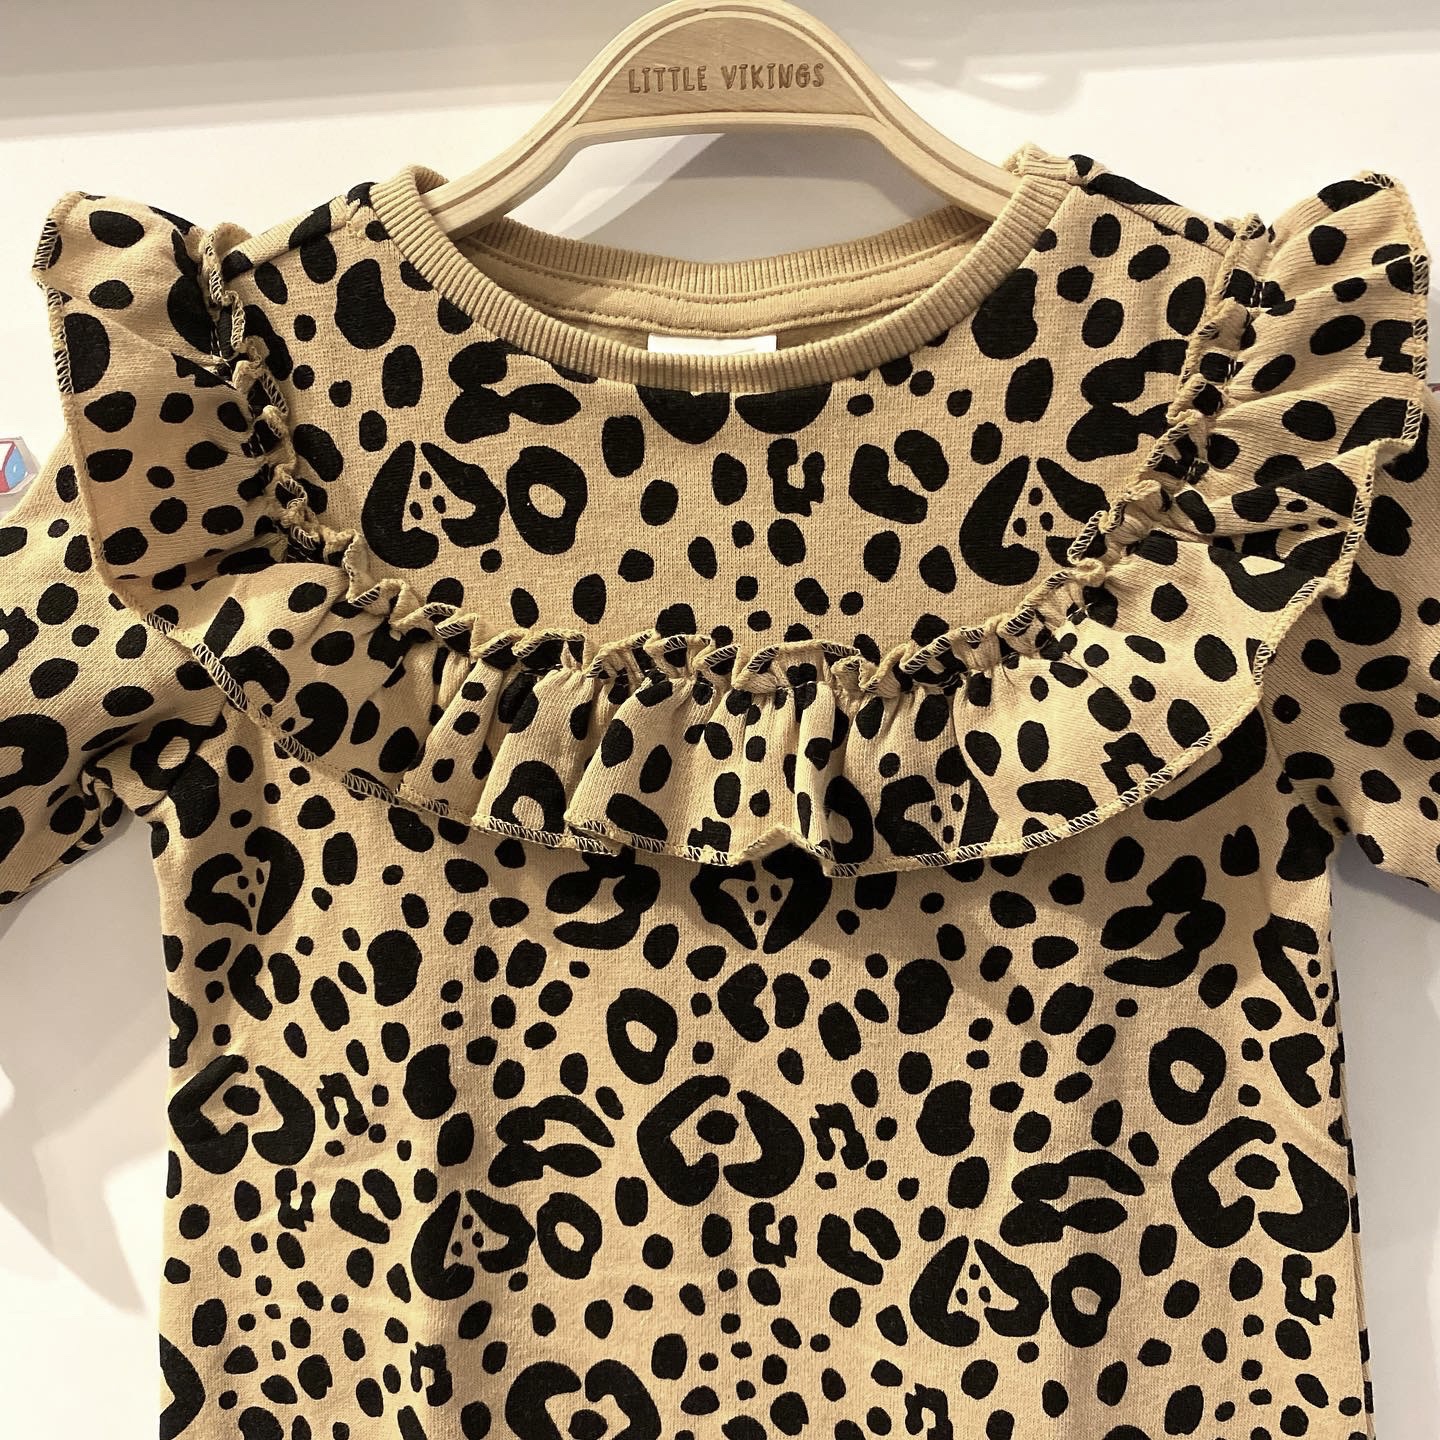 Dress with leopard print